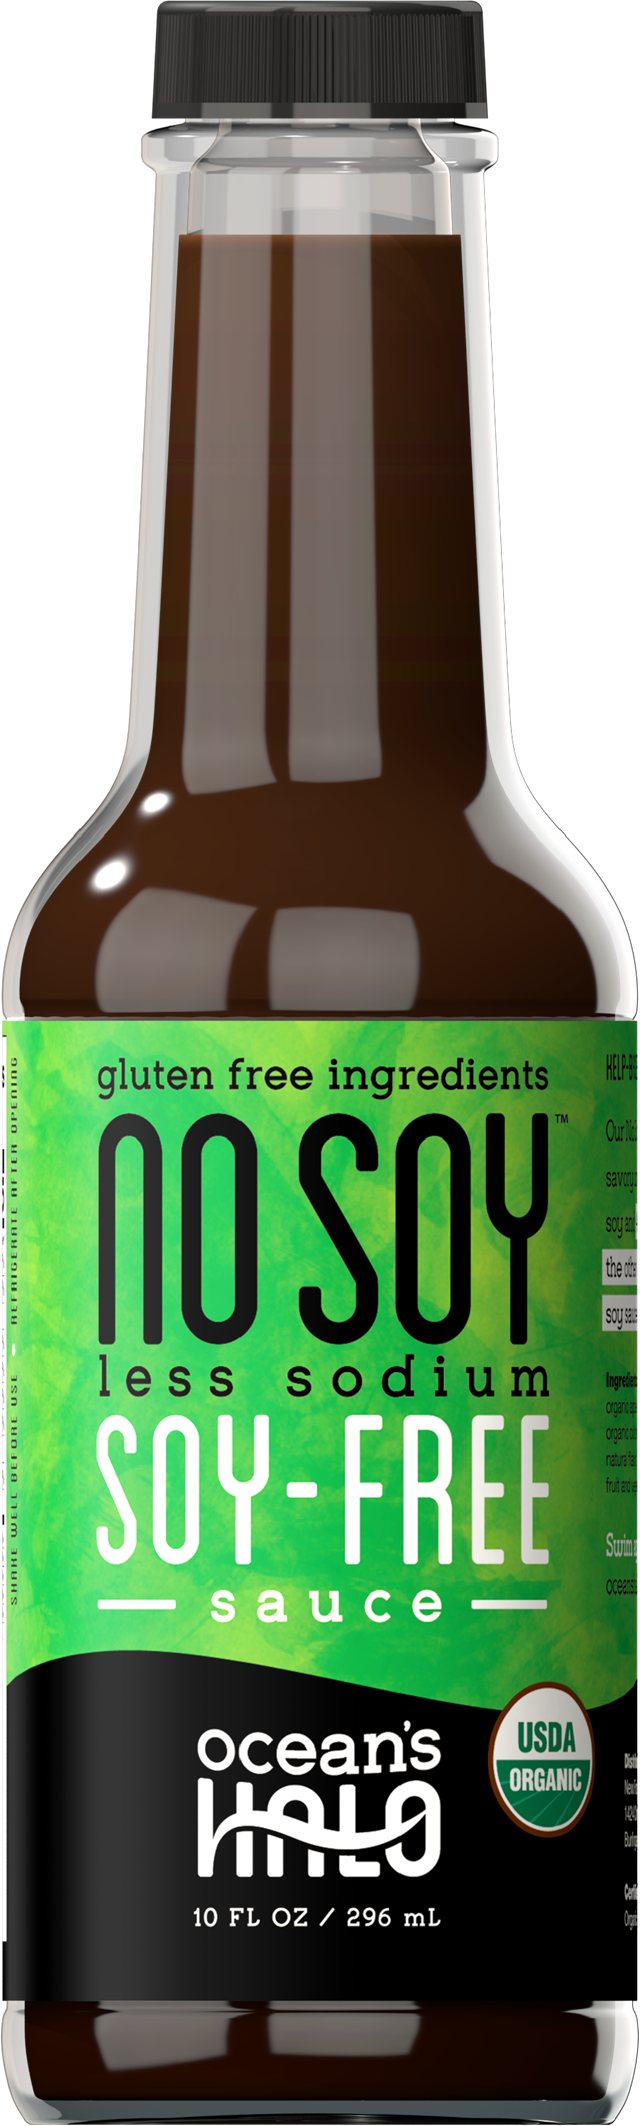 No Soy (less sodium)